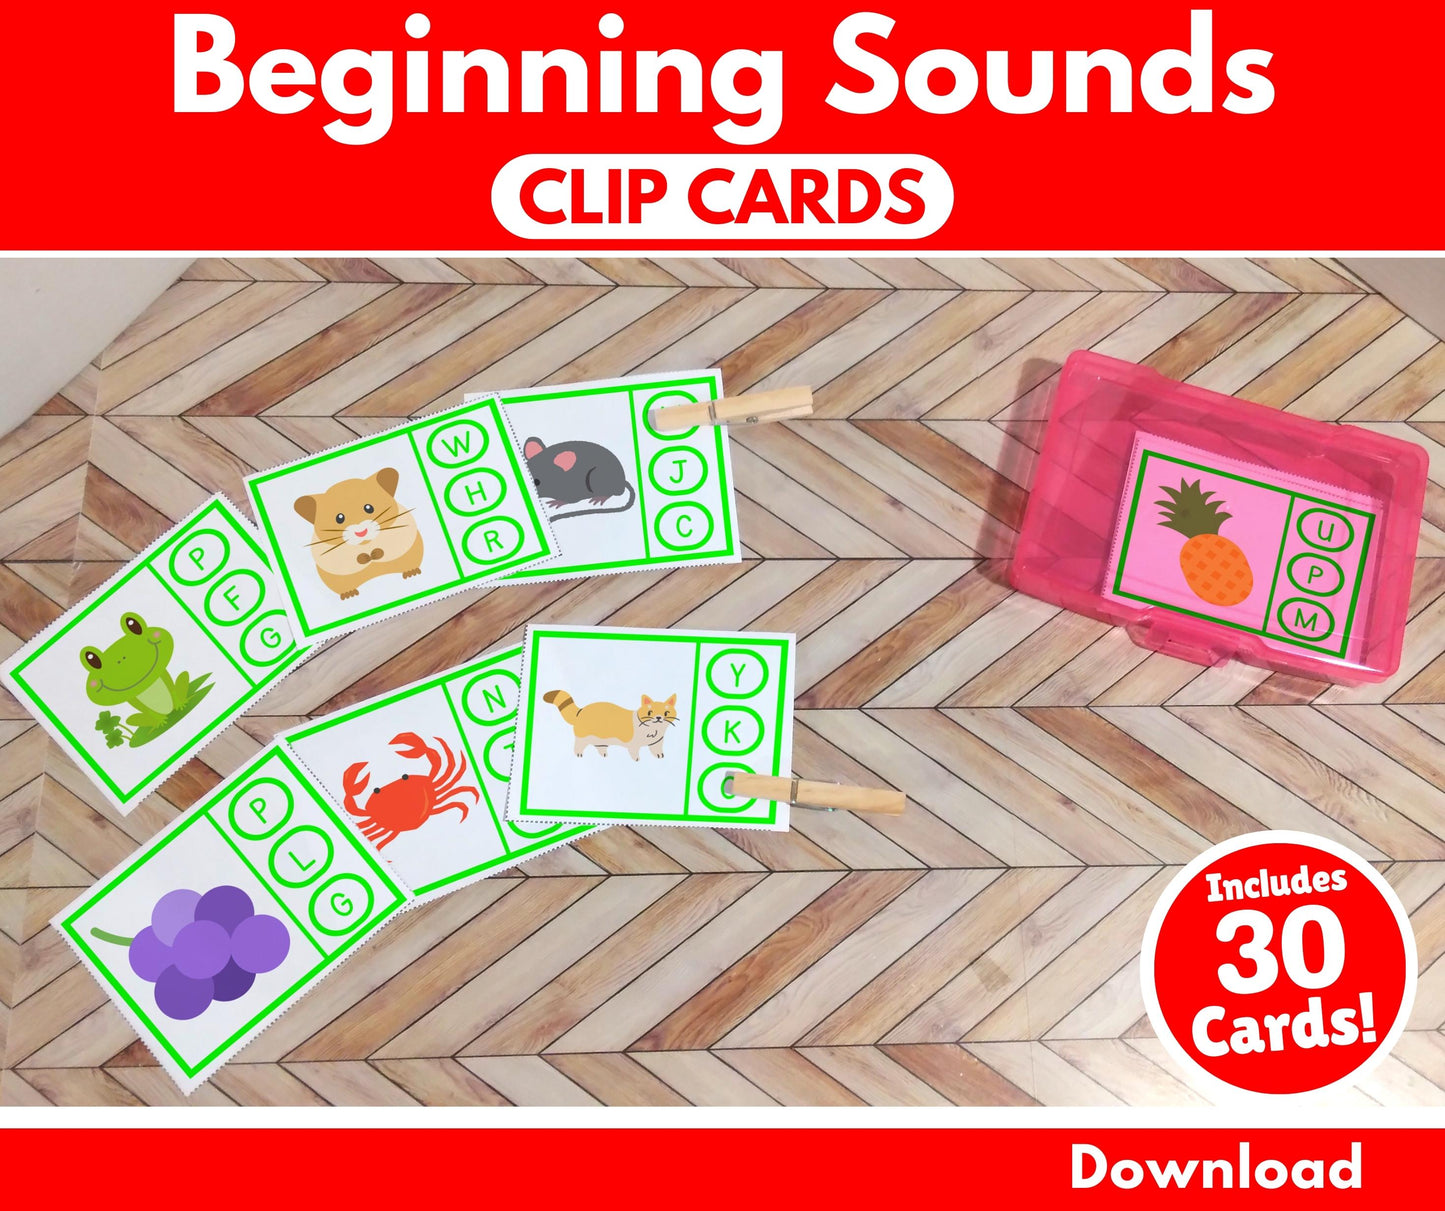 Beginning Sounds Clip Cards - Download